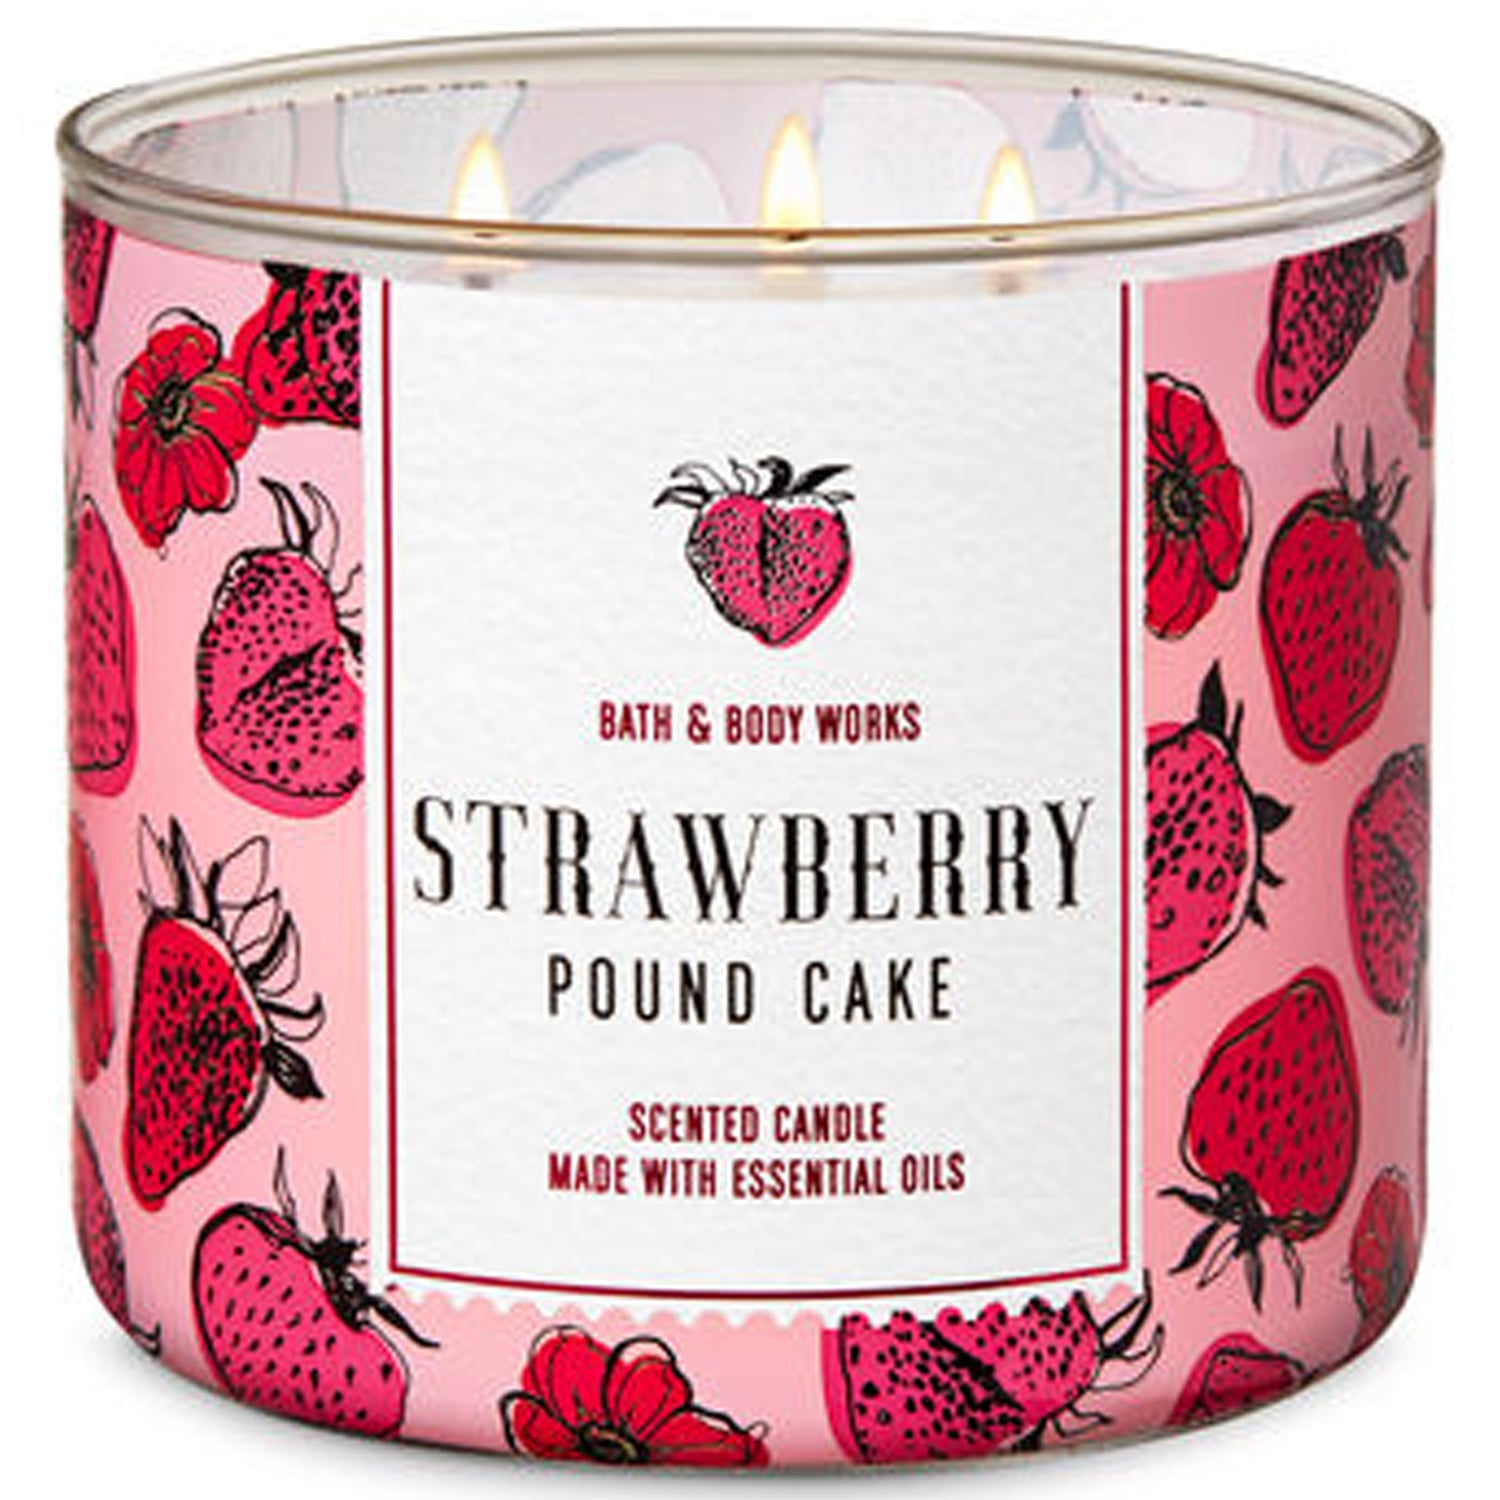 Bath & Body Works Strawberry Pound Cake Candle Scented 3 Wick NEW 